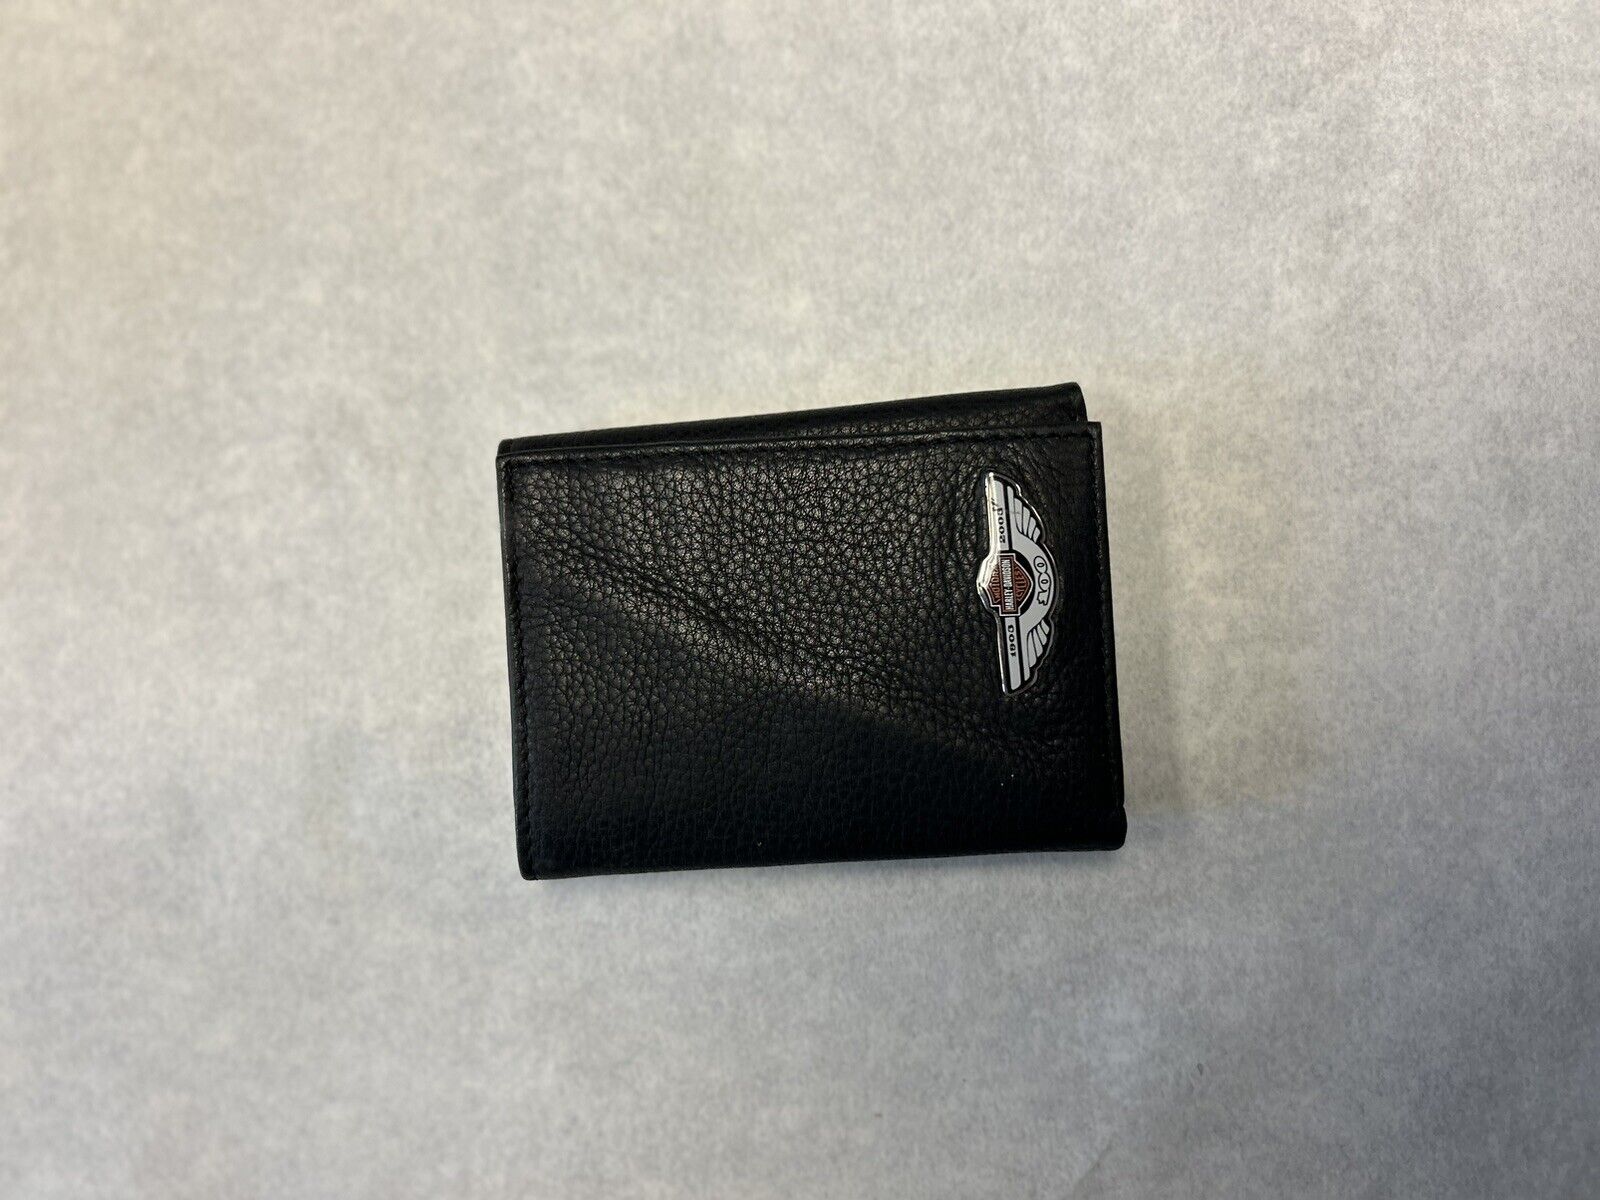 Harley Davidson 100th Anniversary TRI-fold Wallet with emblem